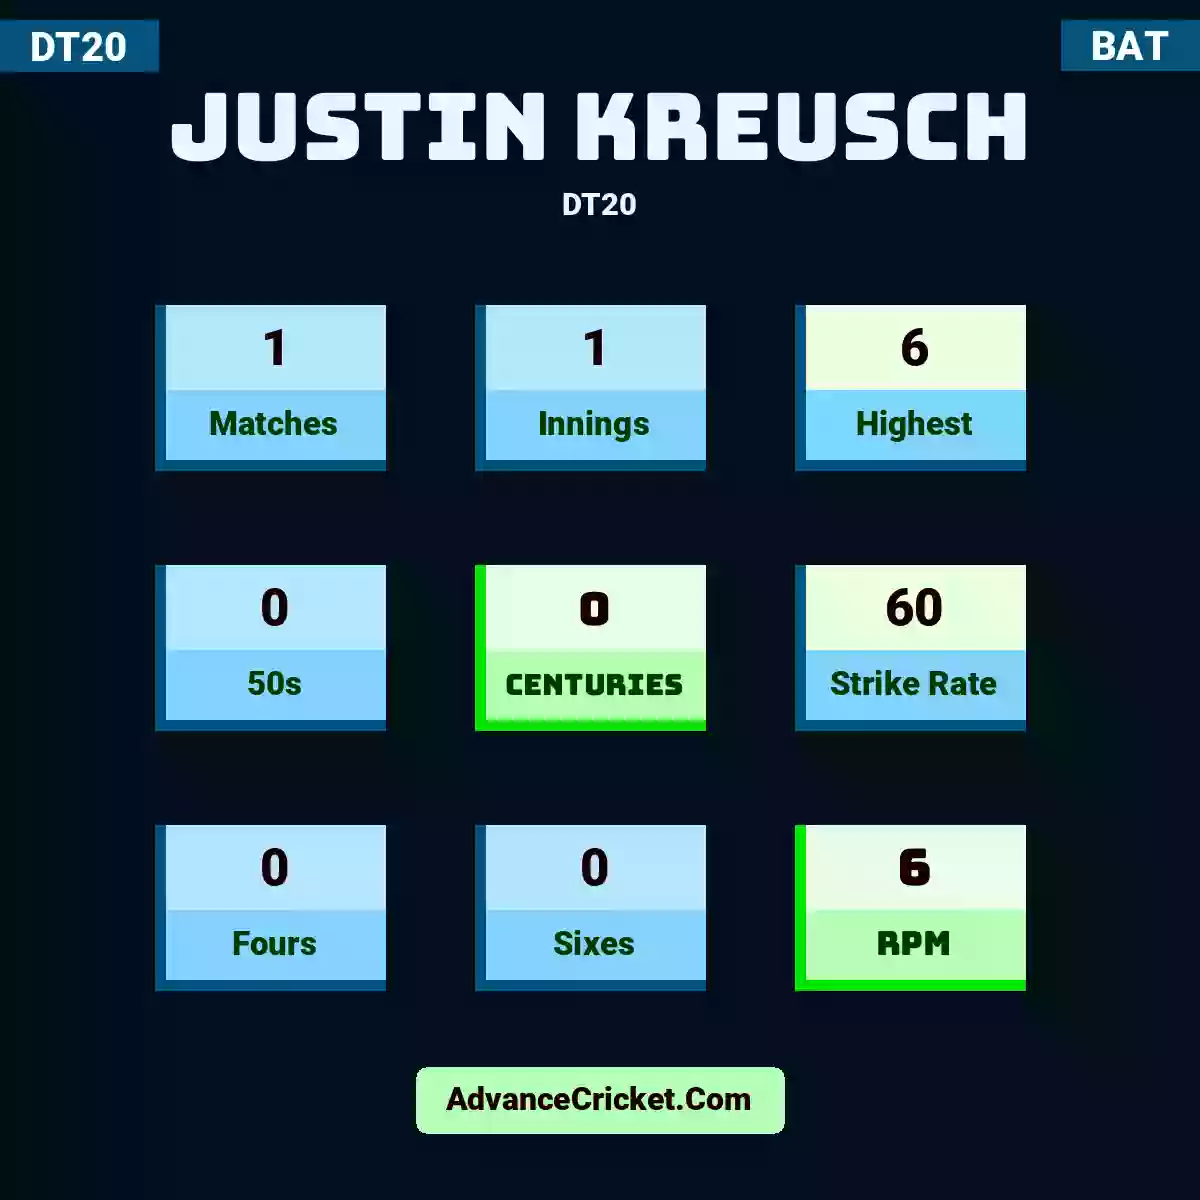 Justin Kreusch DT20 , Justin Kreusch played 1 matches, scored 6 runs as highest, 0 half-centuries, and 0 centuries, with a strike rate of 60. J.Kreusch hit 0 fours and 0 sixes, with an RPM of 6.